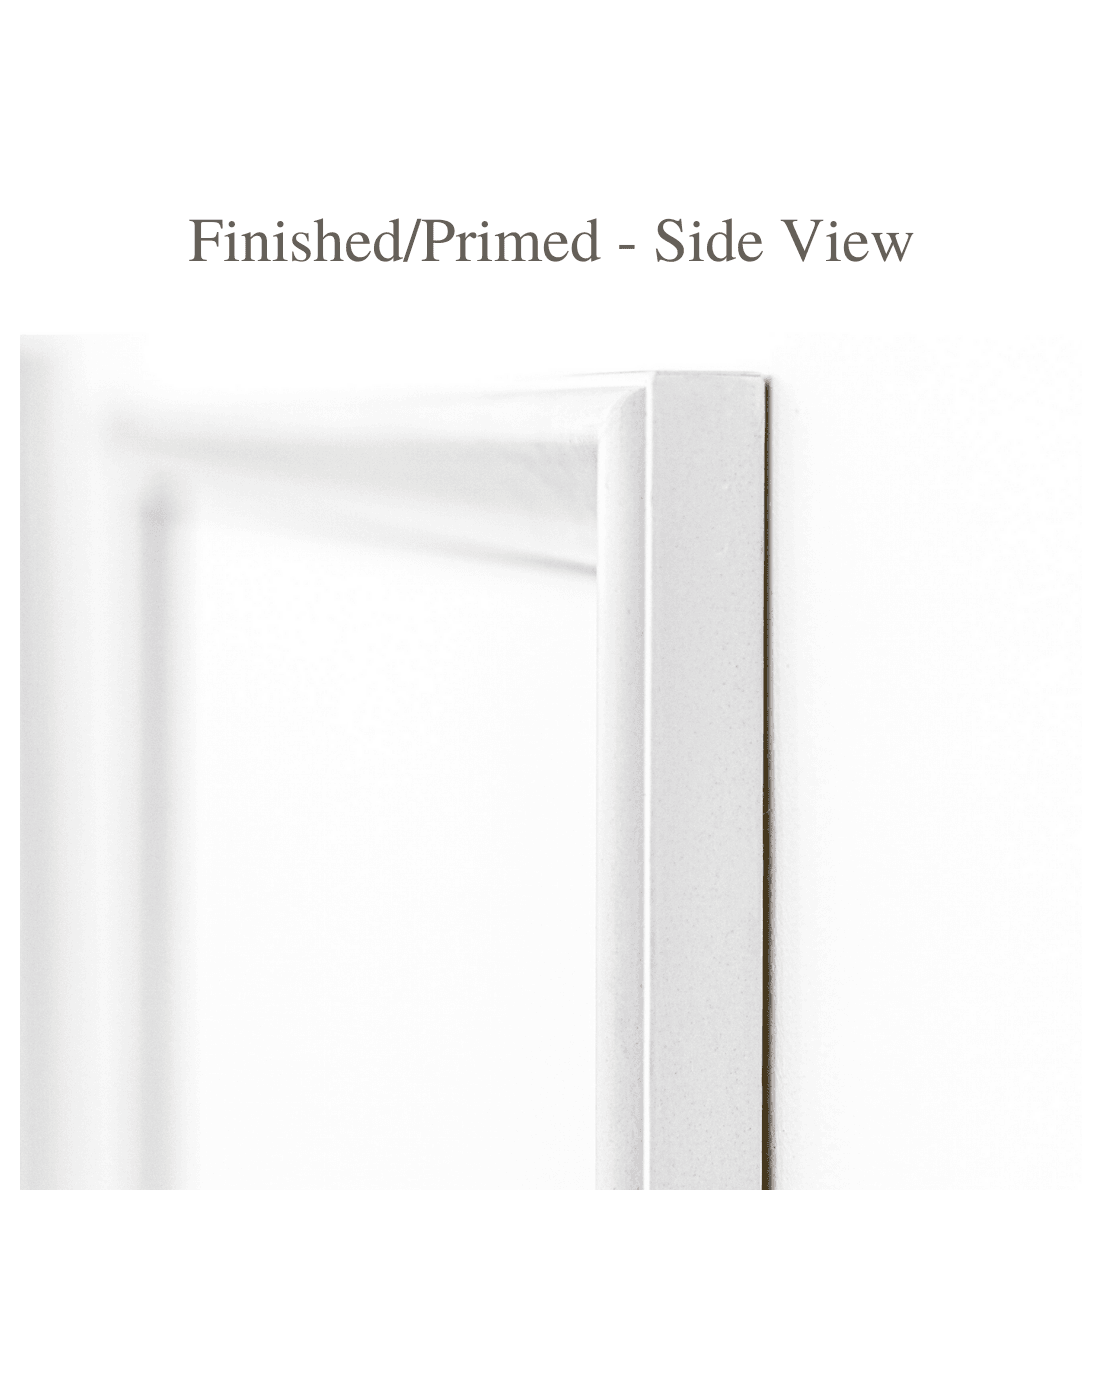 Classic Framed Please Close Door Behind You Wall or Door Sign -  Canada